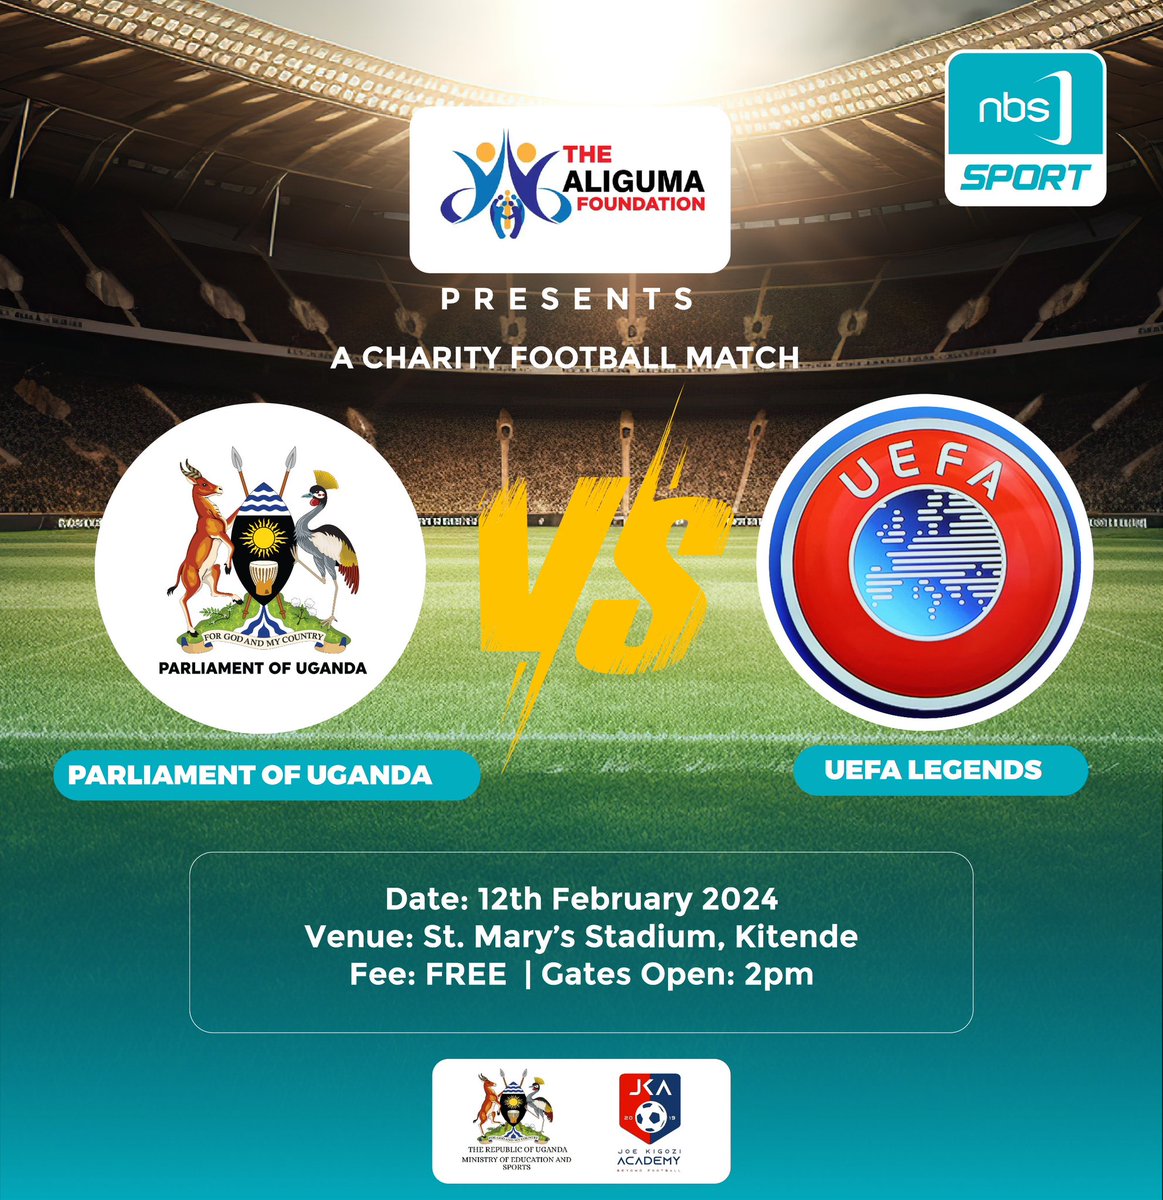 The biggest match this February @Parliament_Ug Vs @UEFA Legends. @SportsEmpower @usmissionuganda @UEFA_Foundation